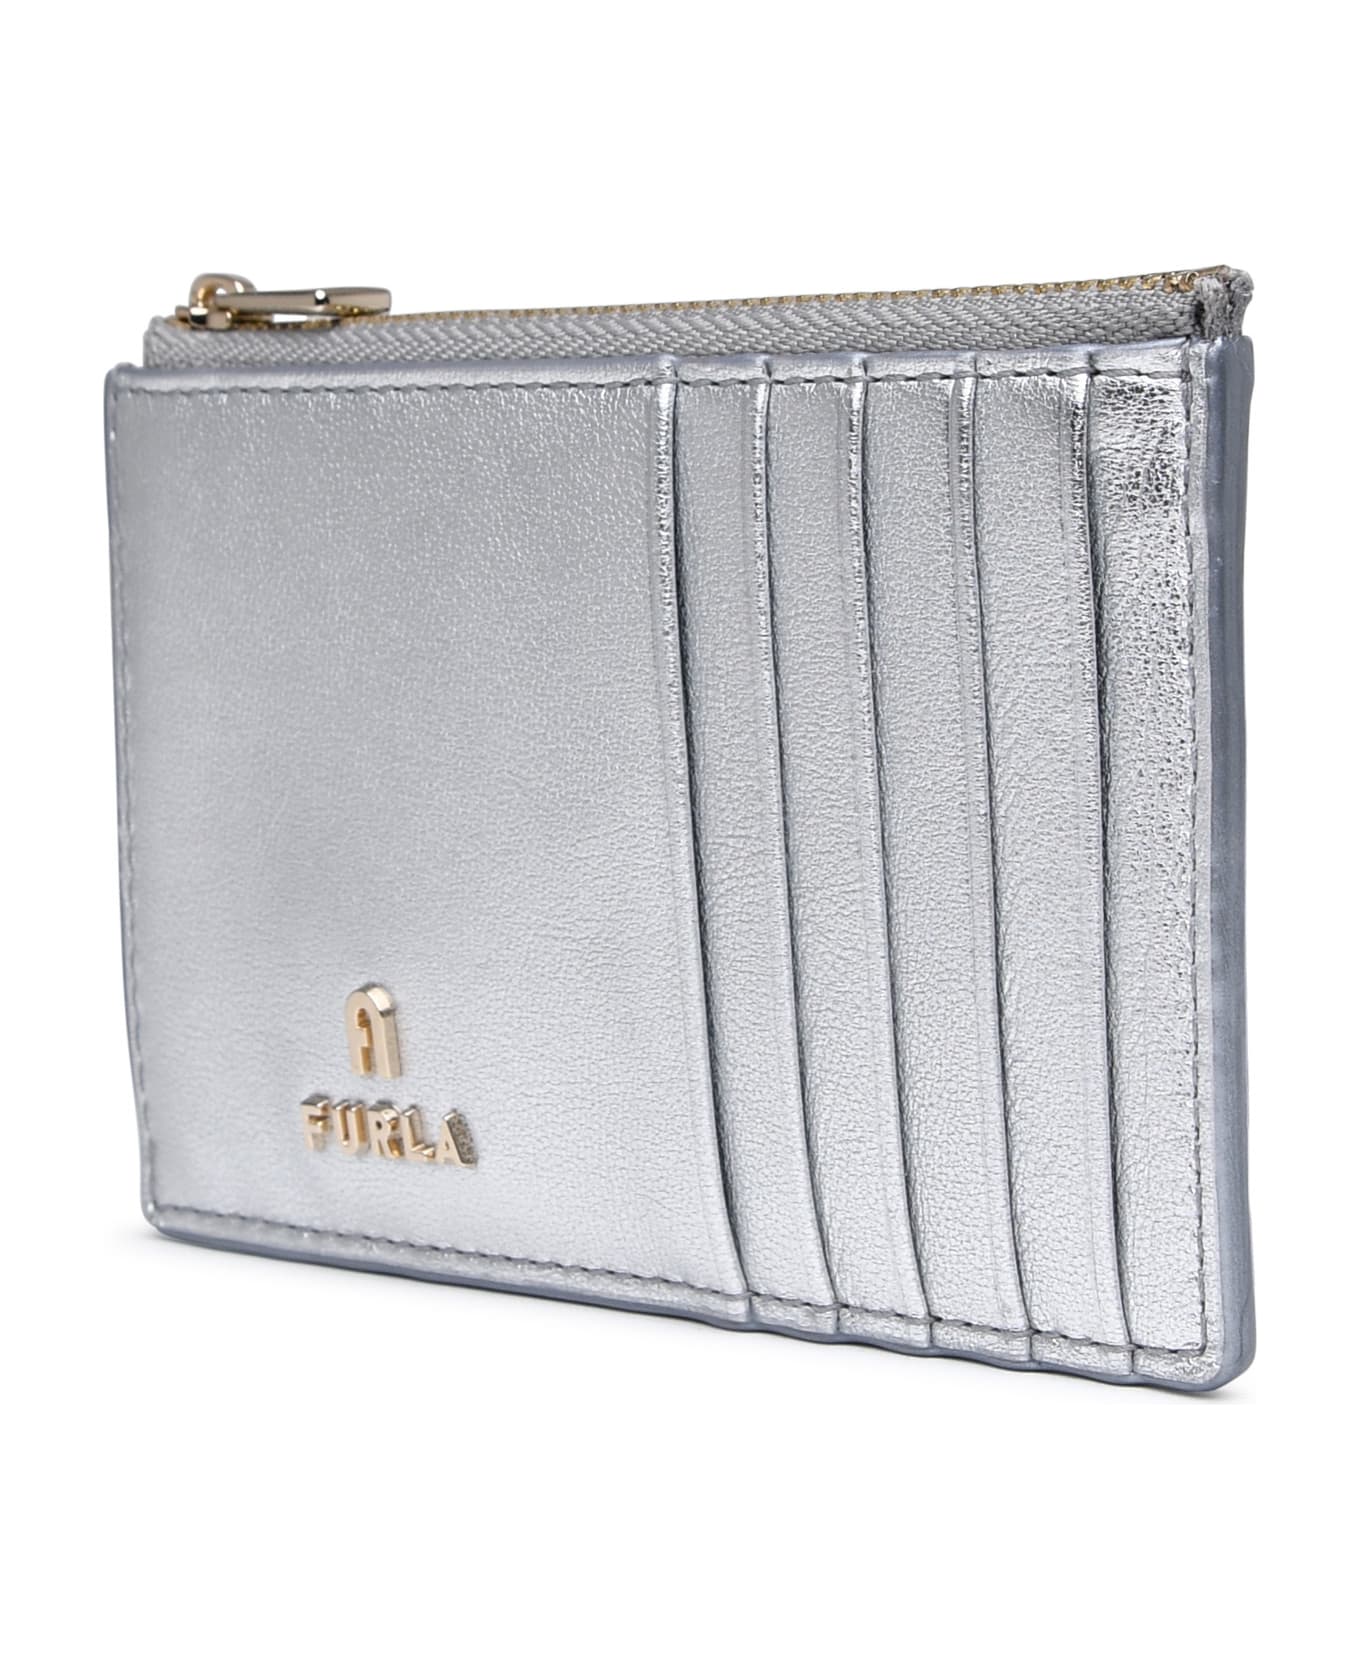 Furla Silver Leather Cardholder - Silver